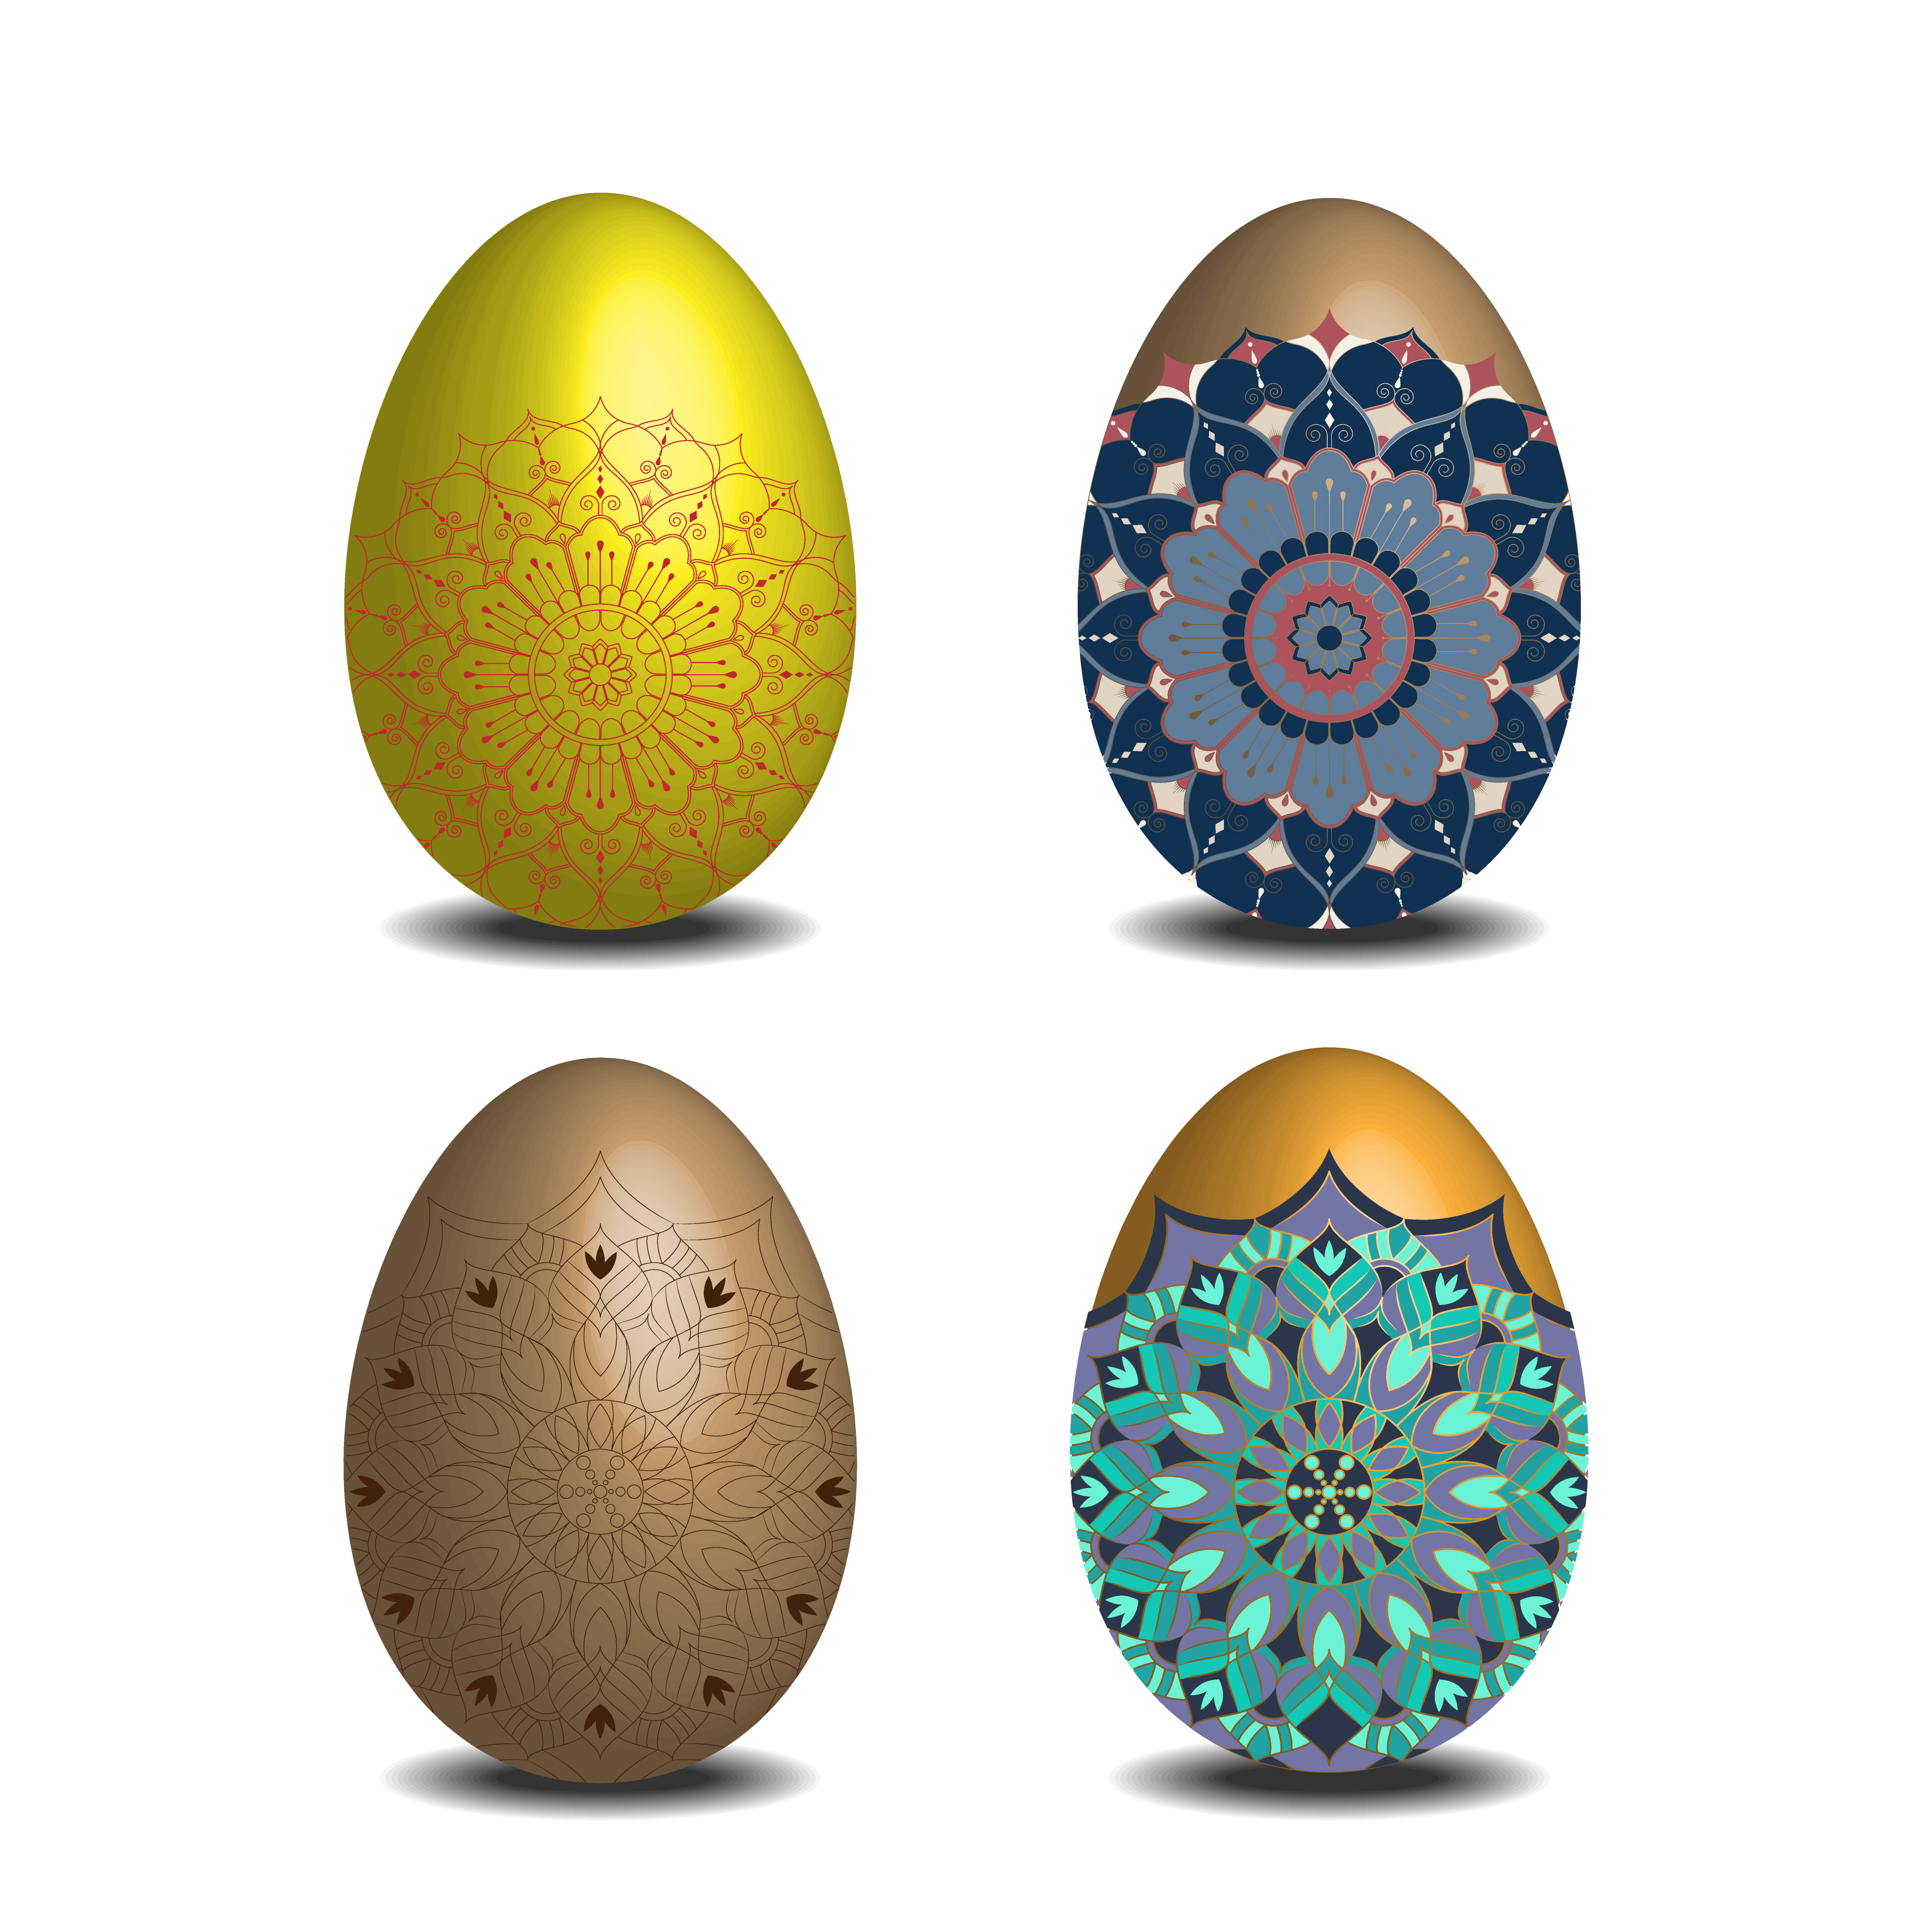 Download Mandala Easter egg collection. - Download Free Vectors ...